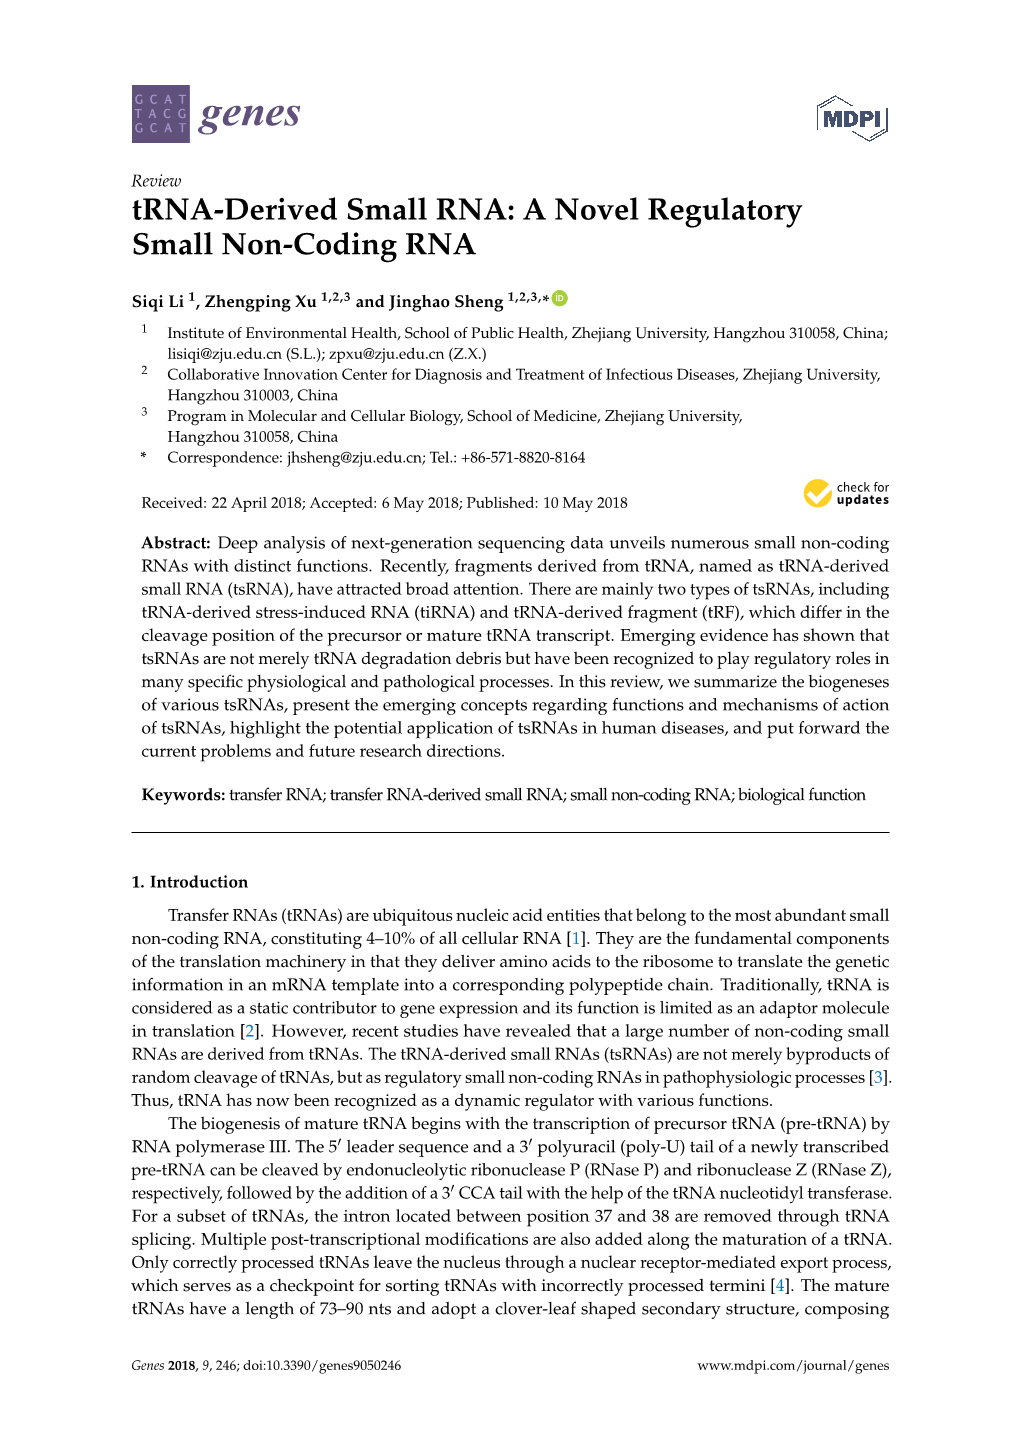 Trna-Derived Small RNA: a Novel Regulatory Small Non-Coding RNA